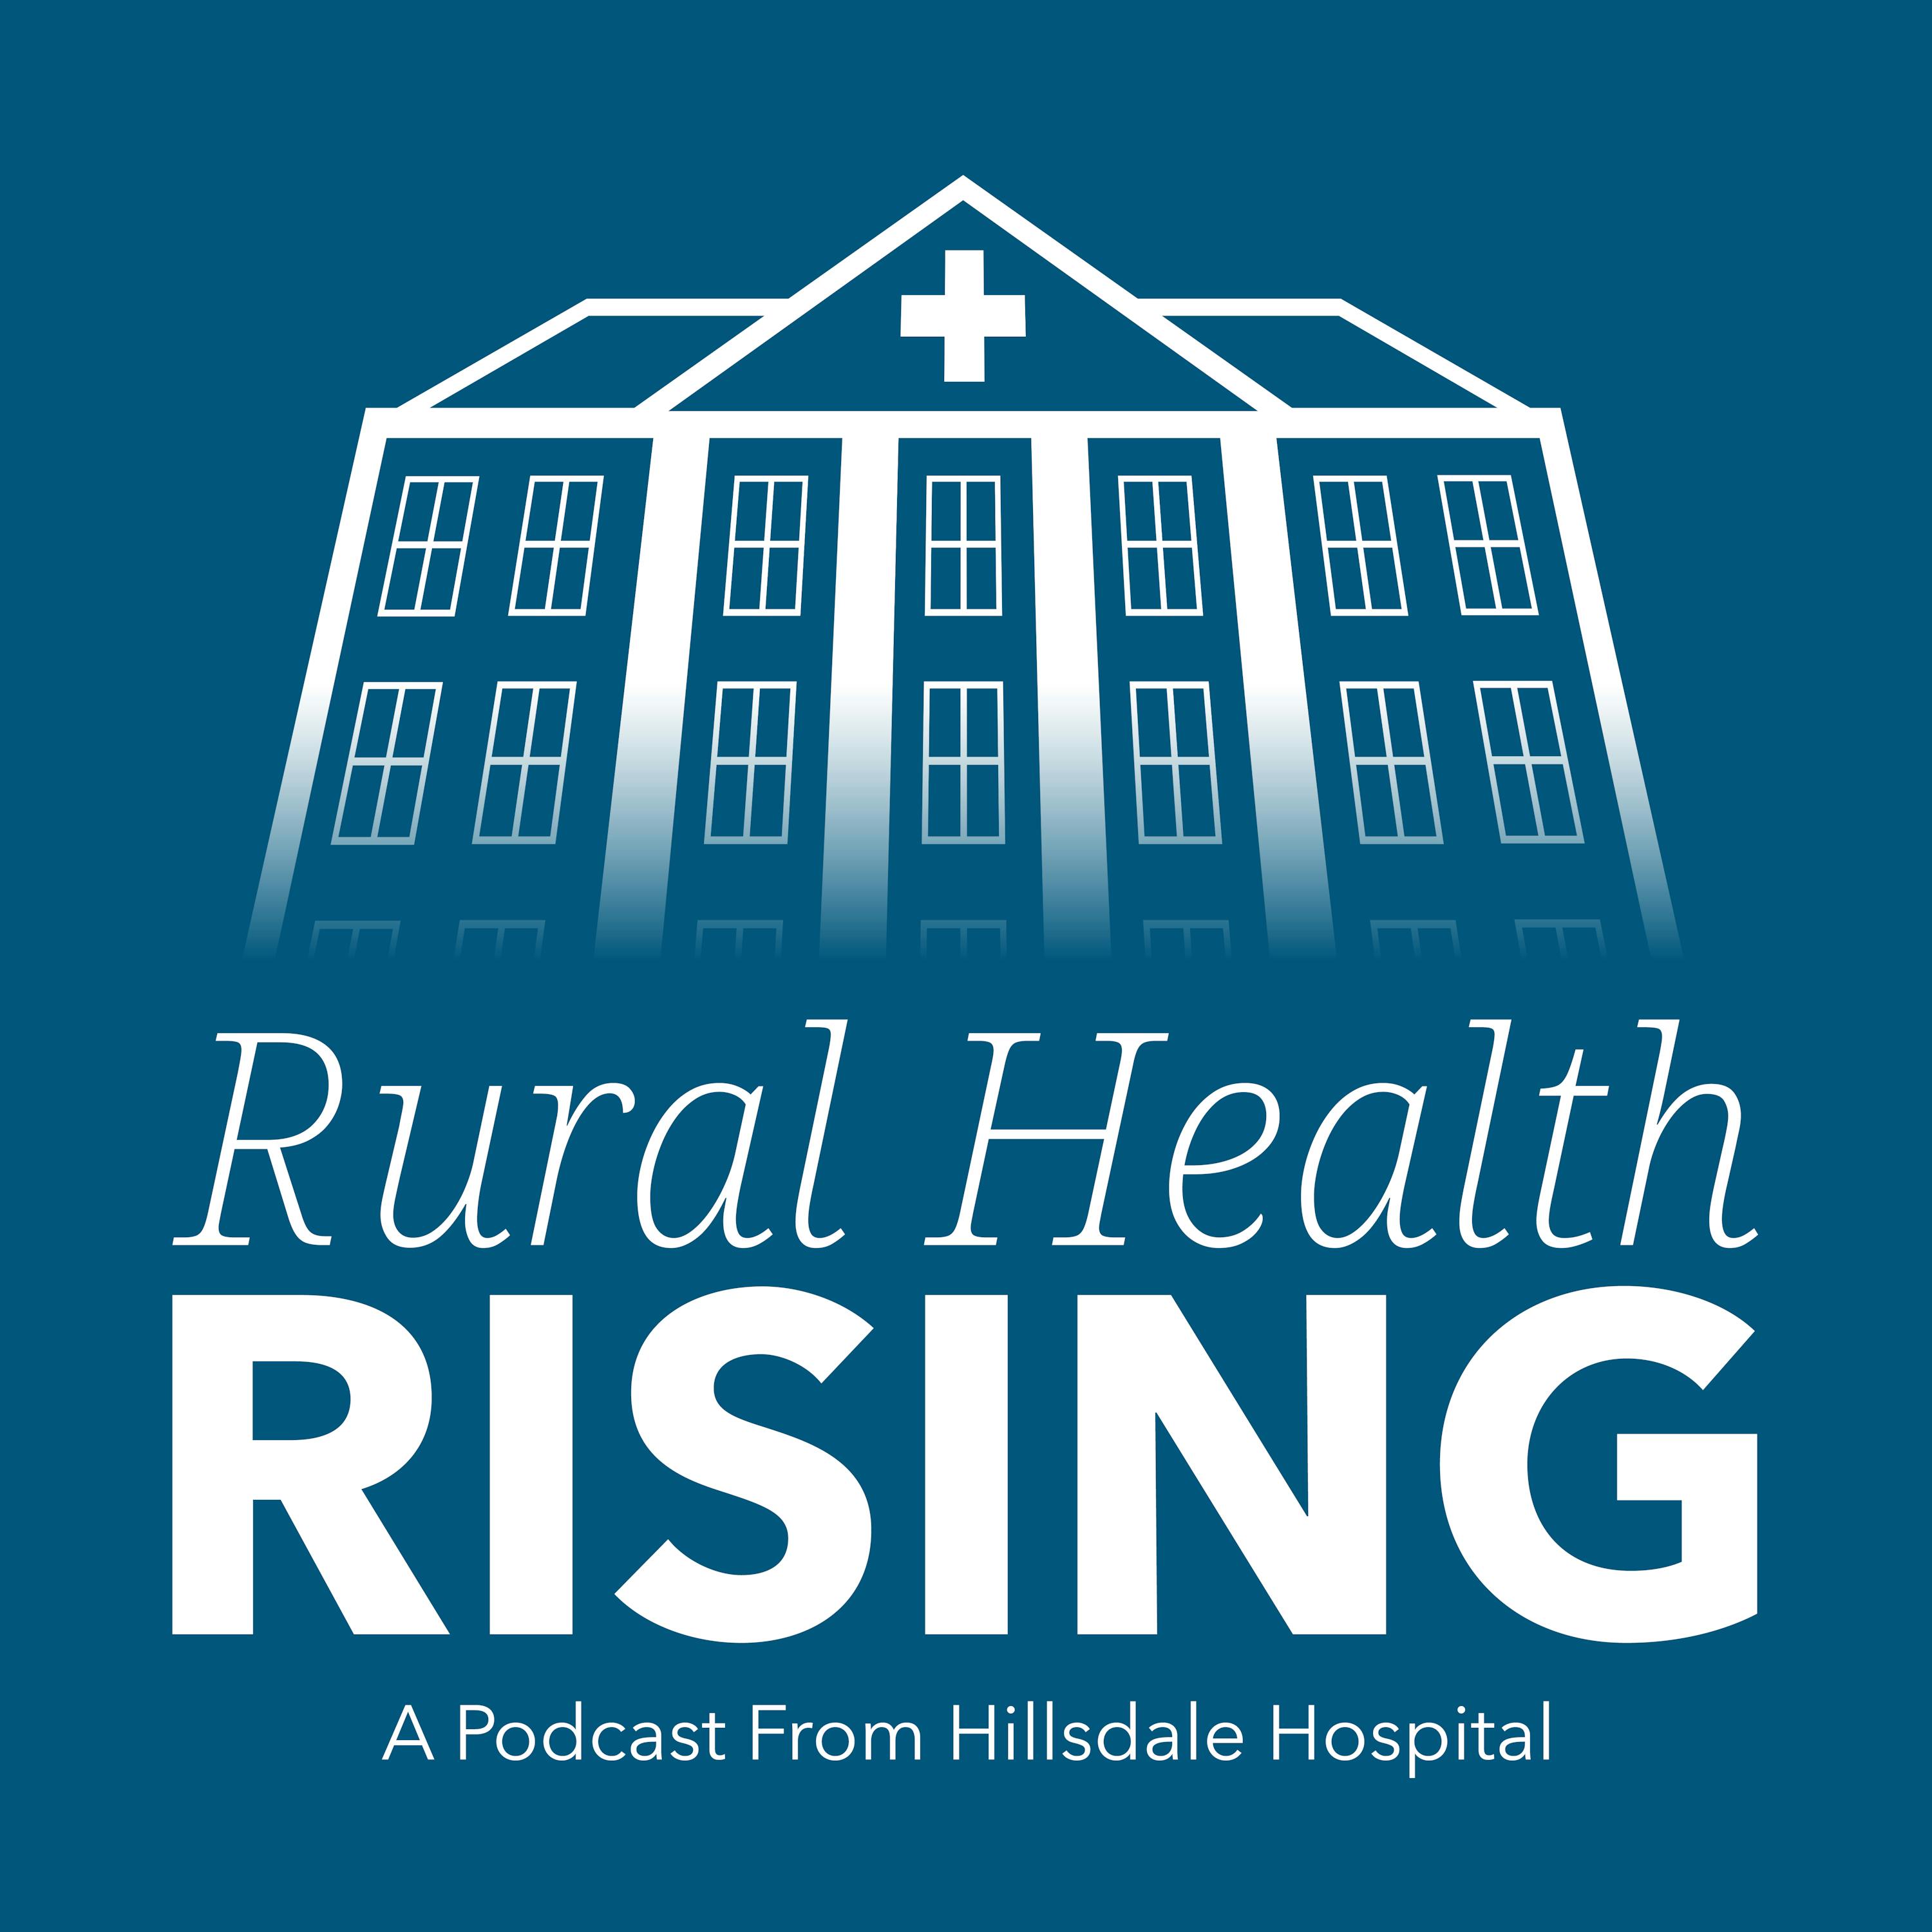 Episode 124: Vascular Care in Rural America